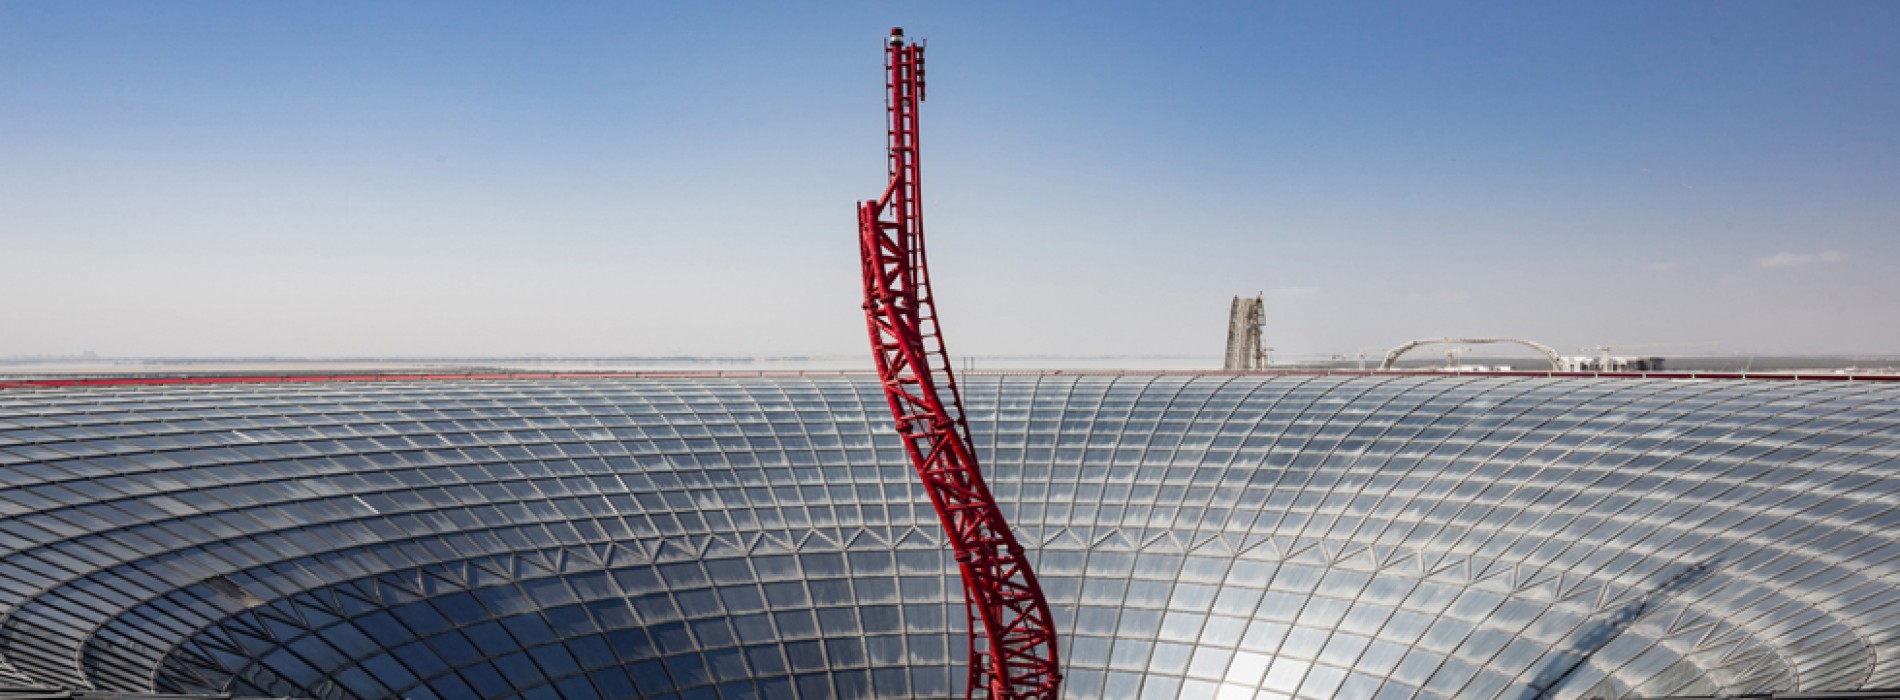 Ferrari World Abu Dhabi Officially Opens its Latest Rollercoaster “Turbo Track”